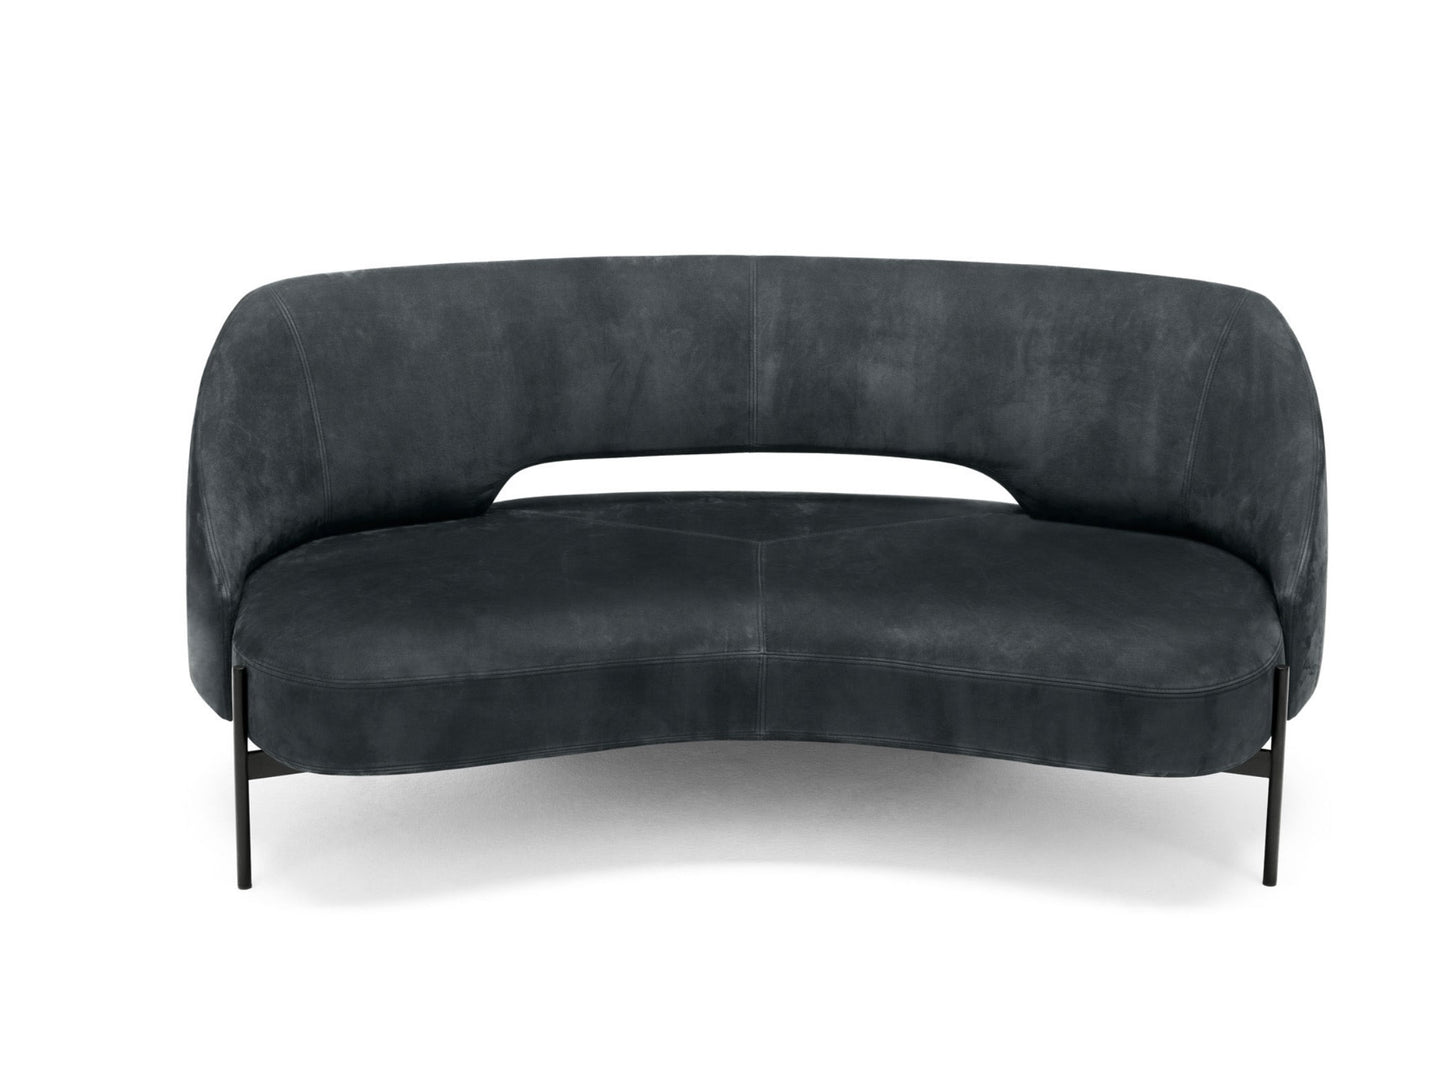 VIRGIN I Curved sofa by MisuraEmme